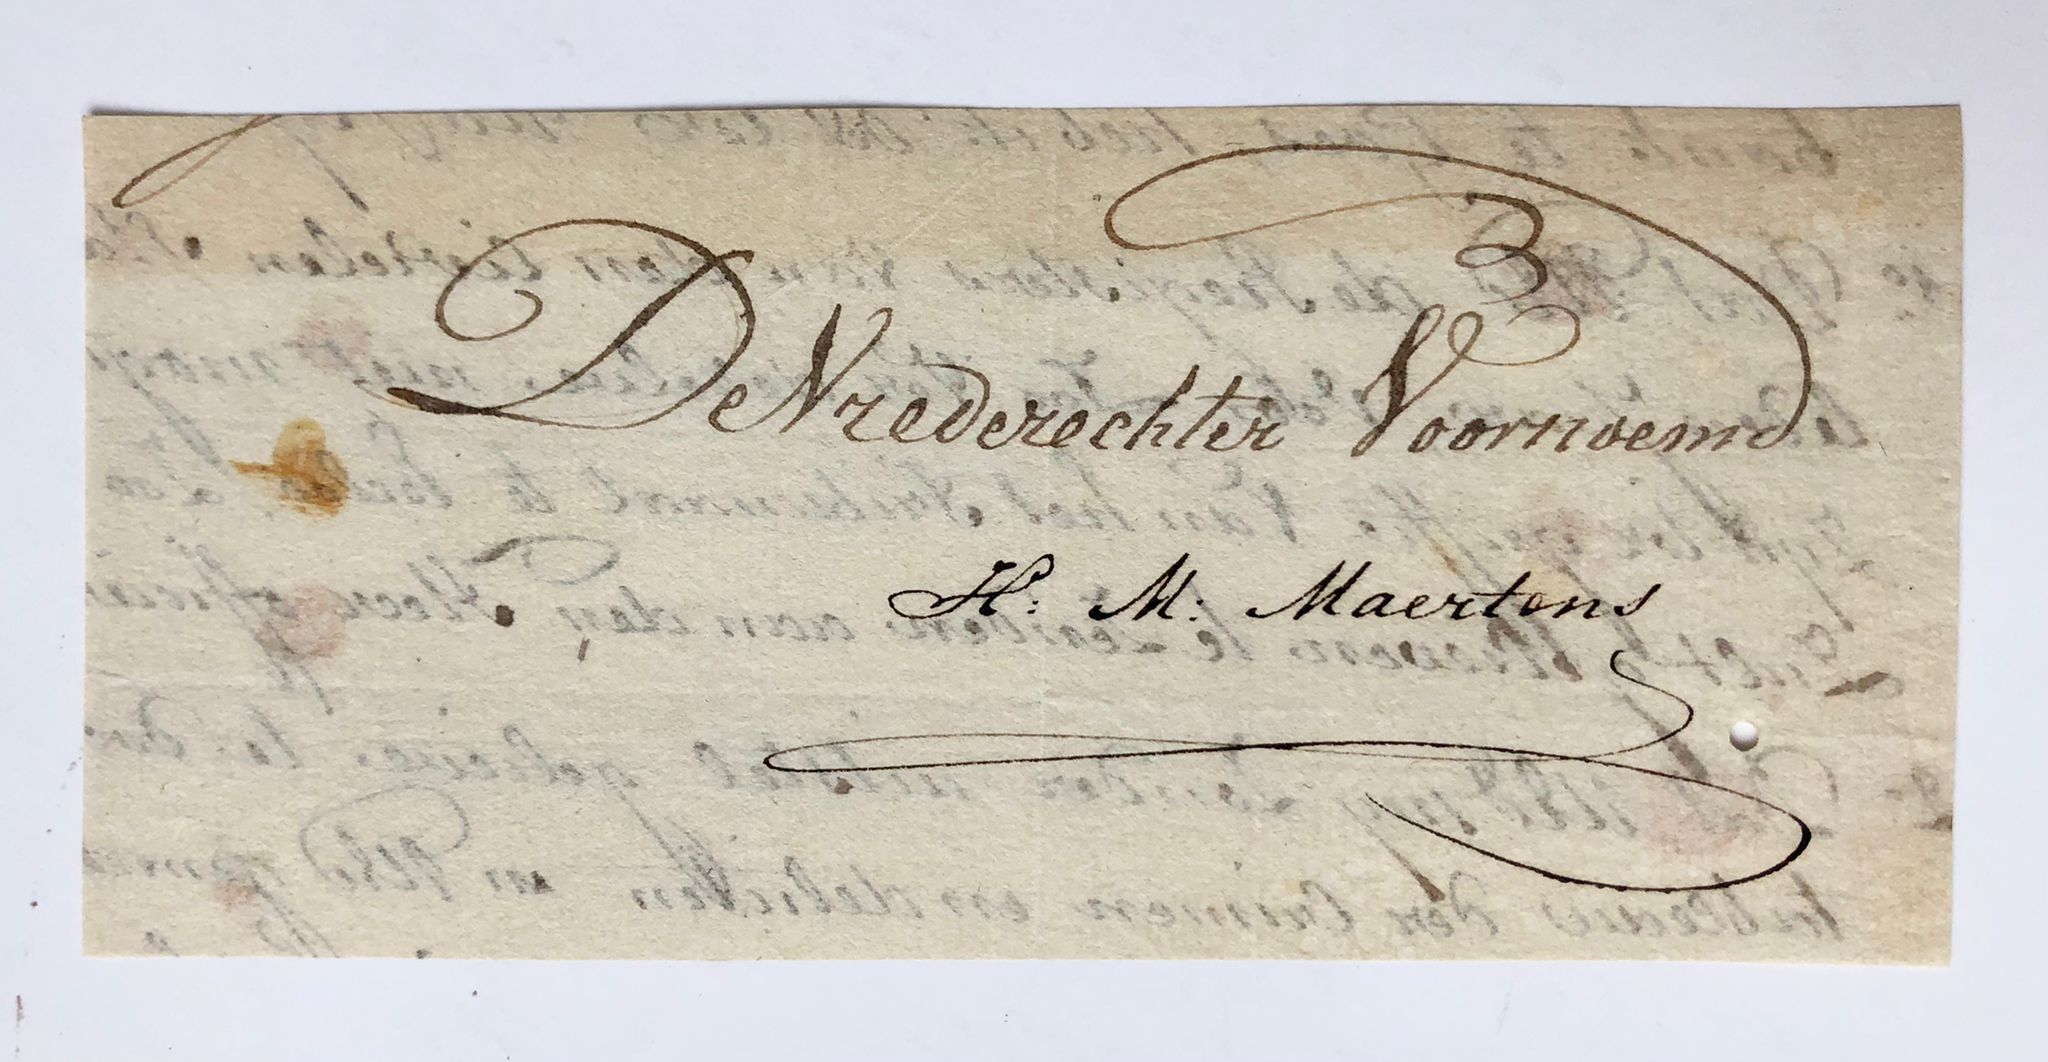  - [Manuscript 1814] Part of a letter by H.M. Maertens, judge of peace, vrederechter van Hulst, 1814, manuscript, 1 p.